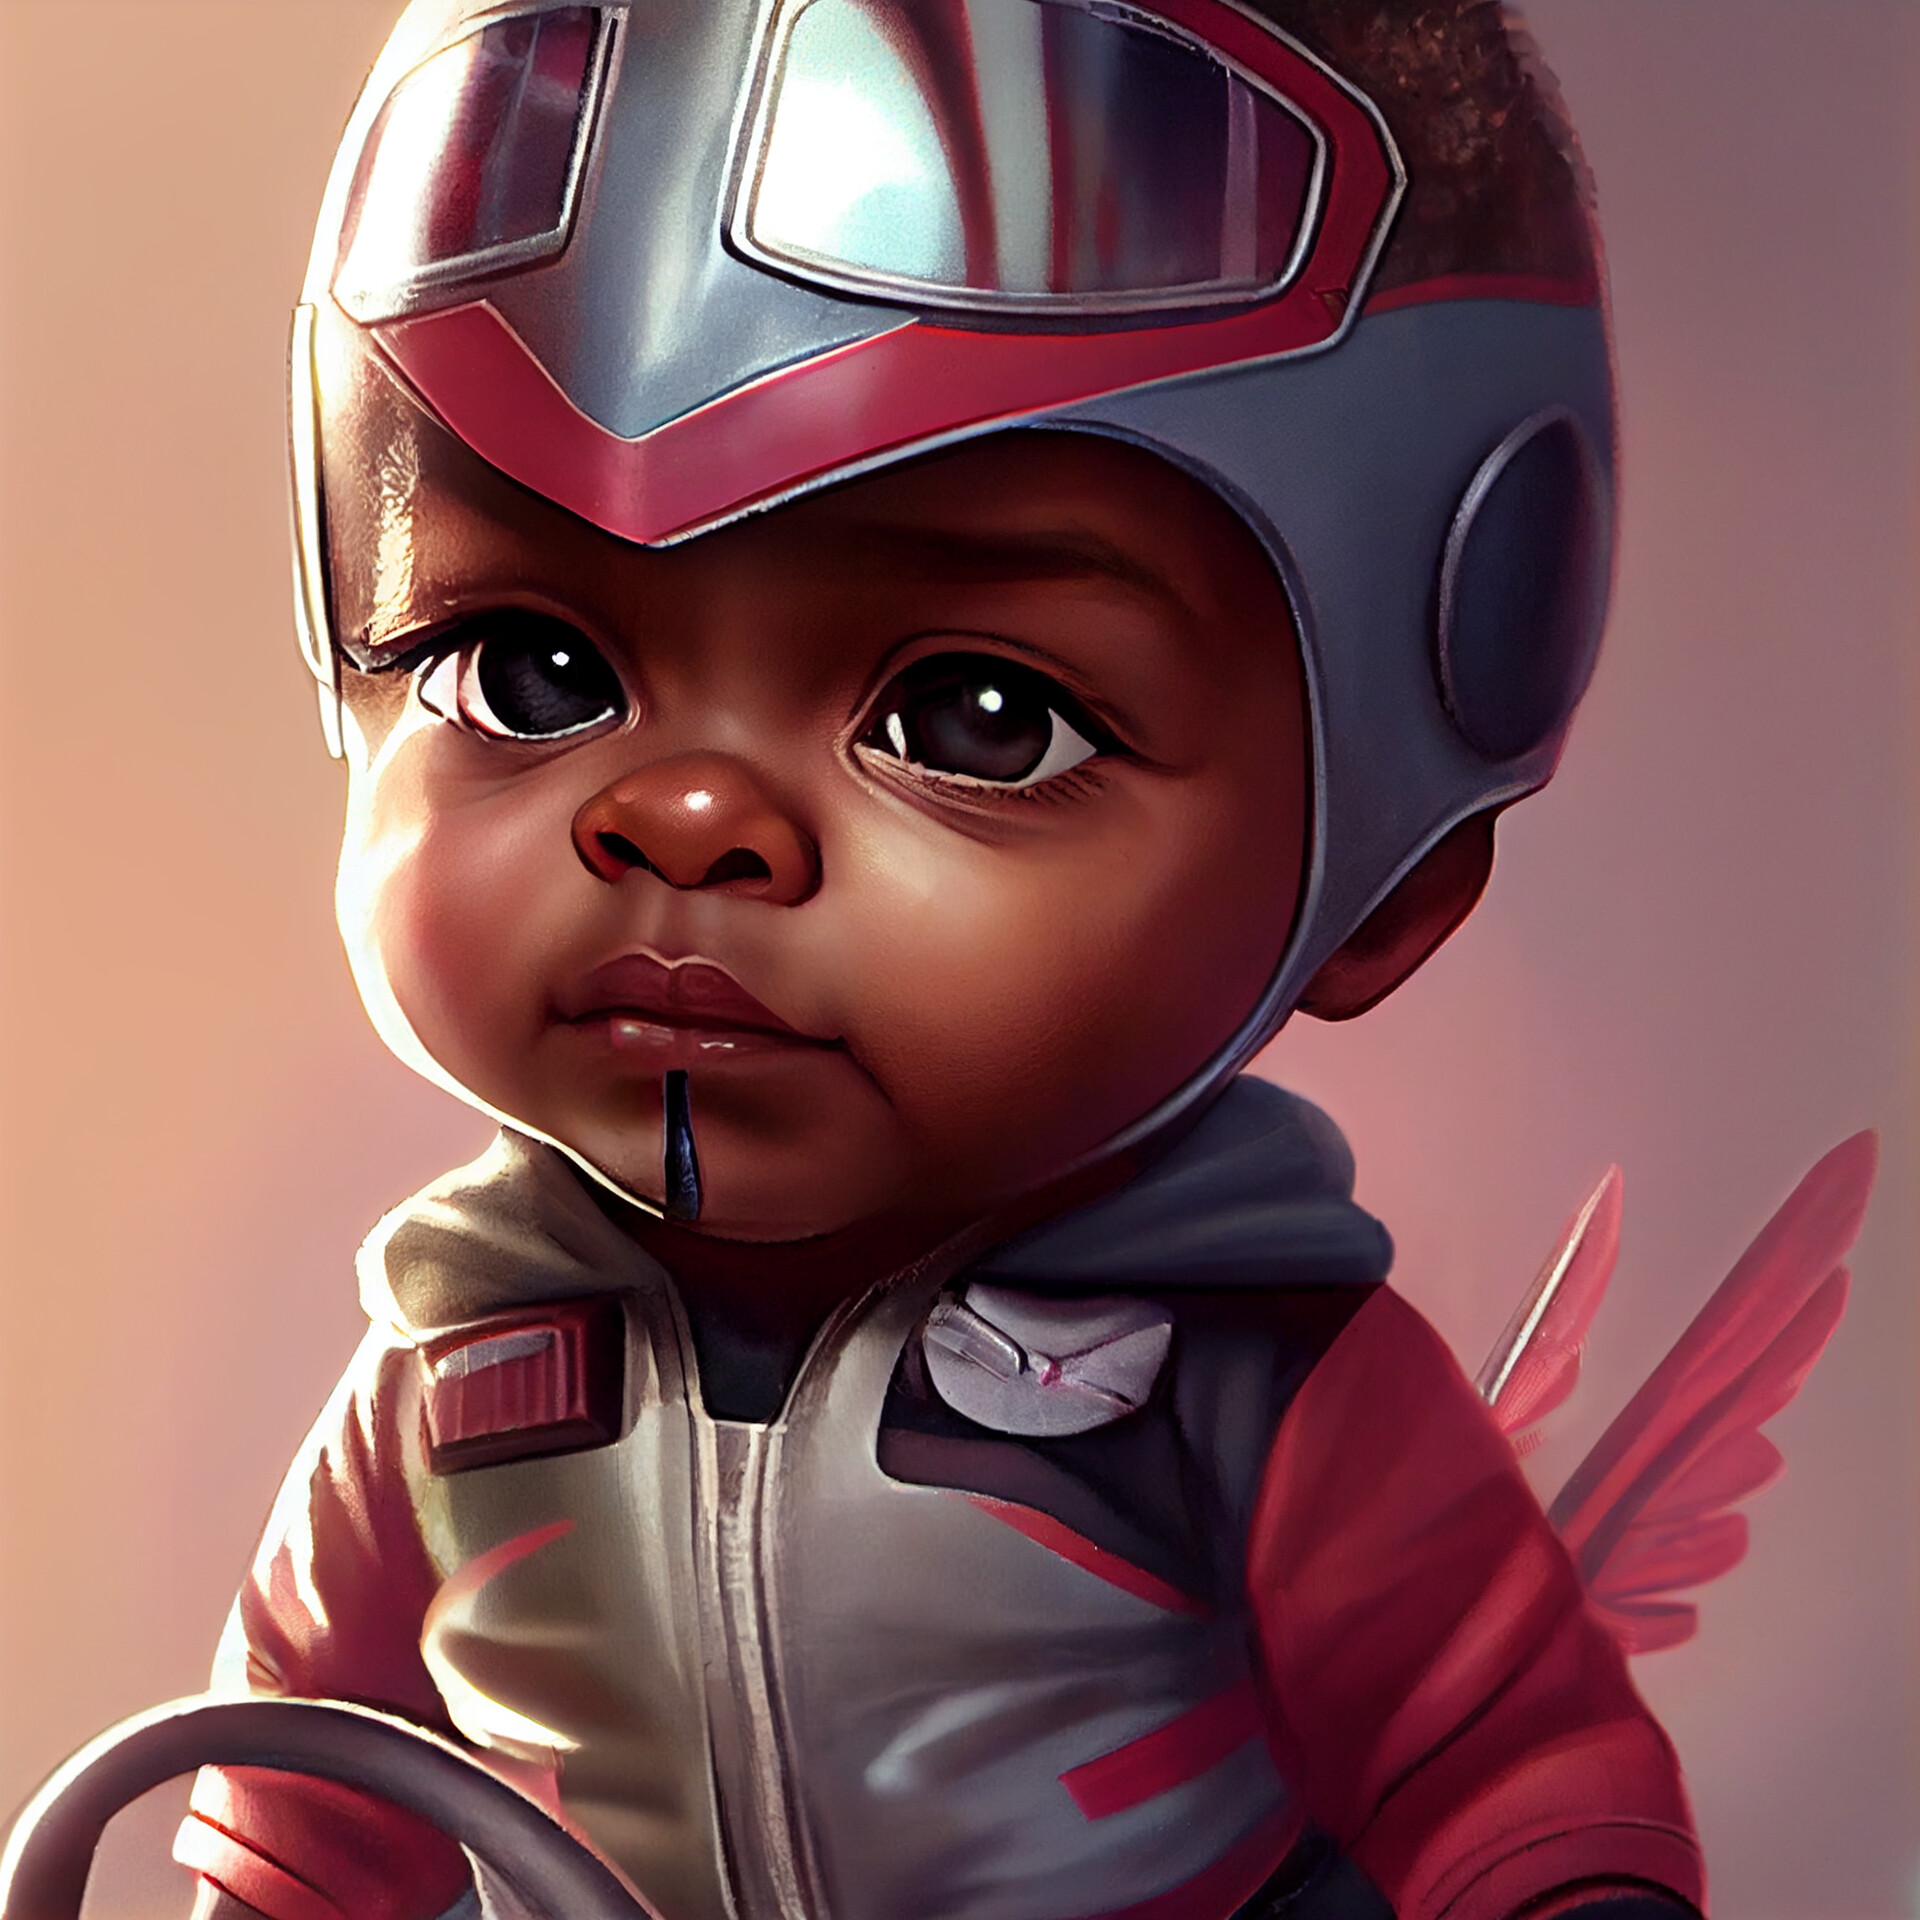 ArtStation - Marvel Babies Collection